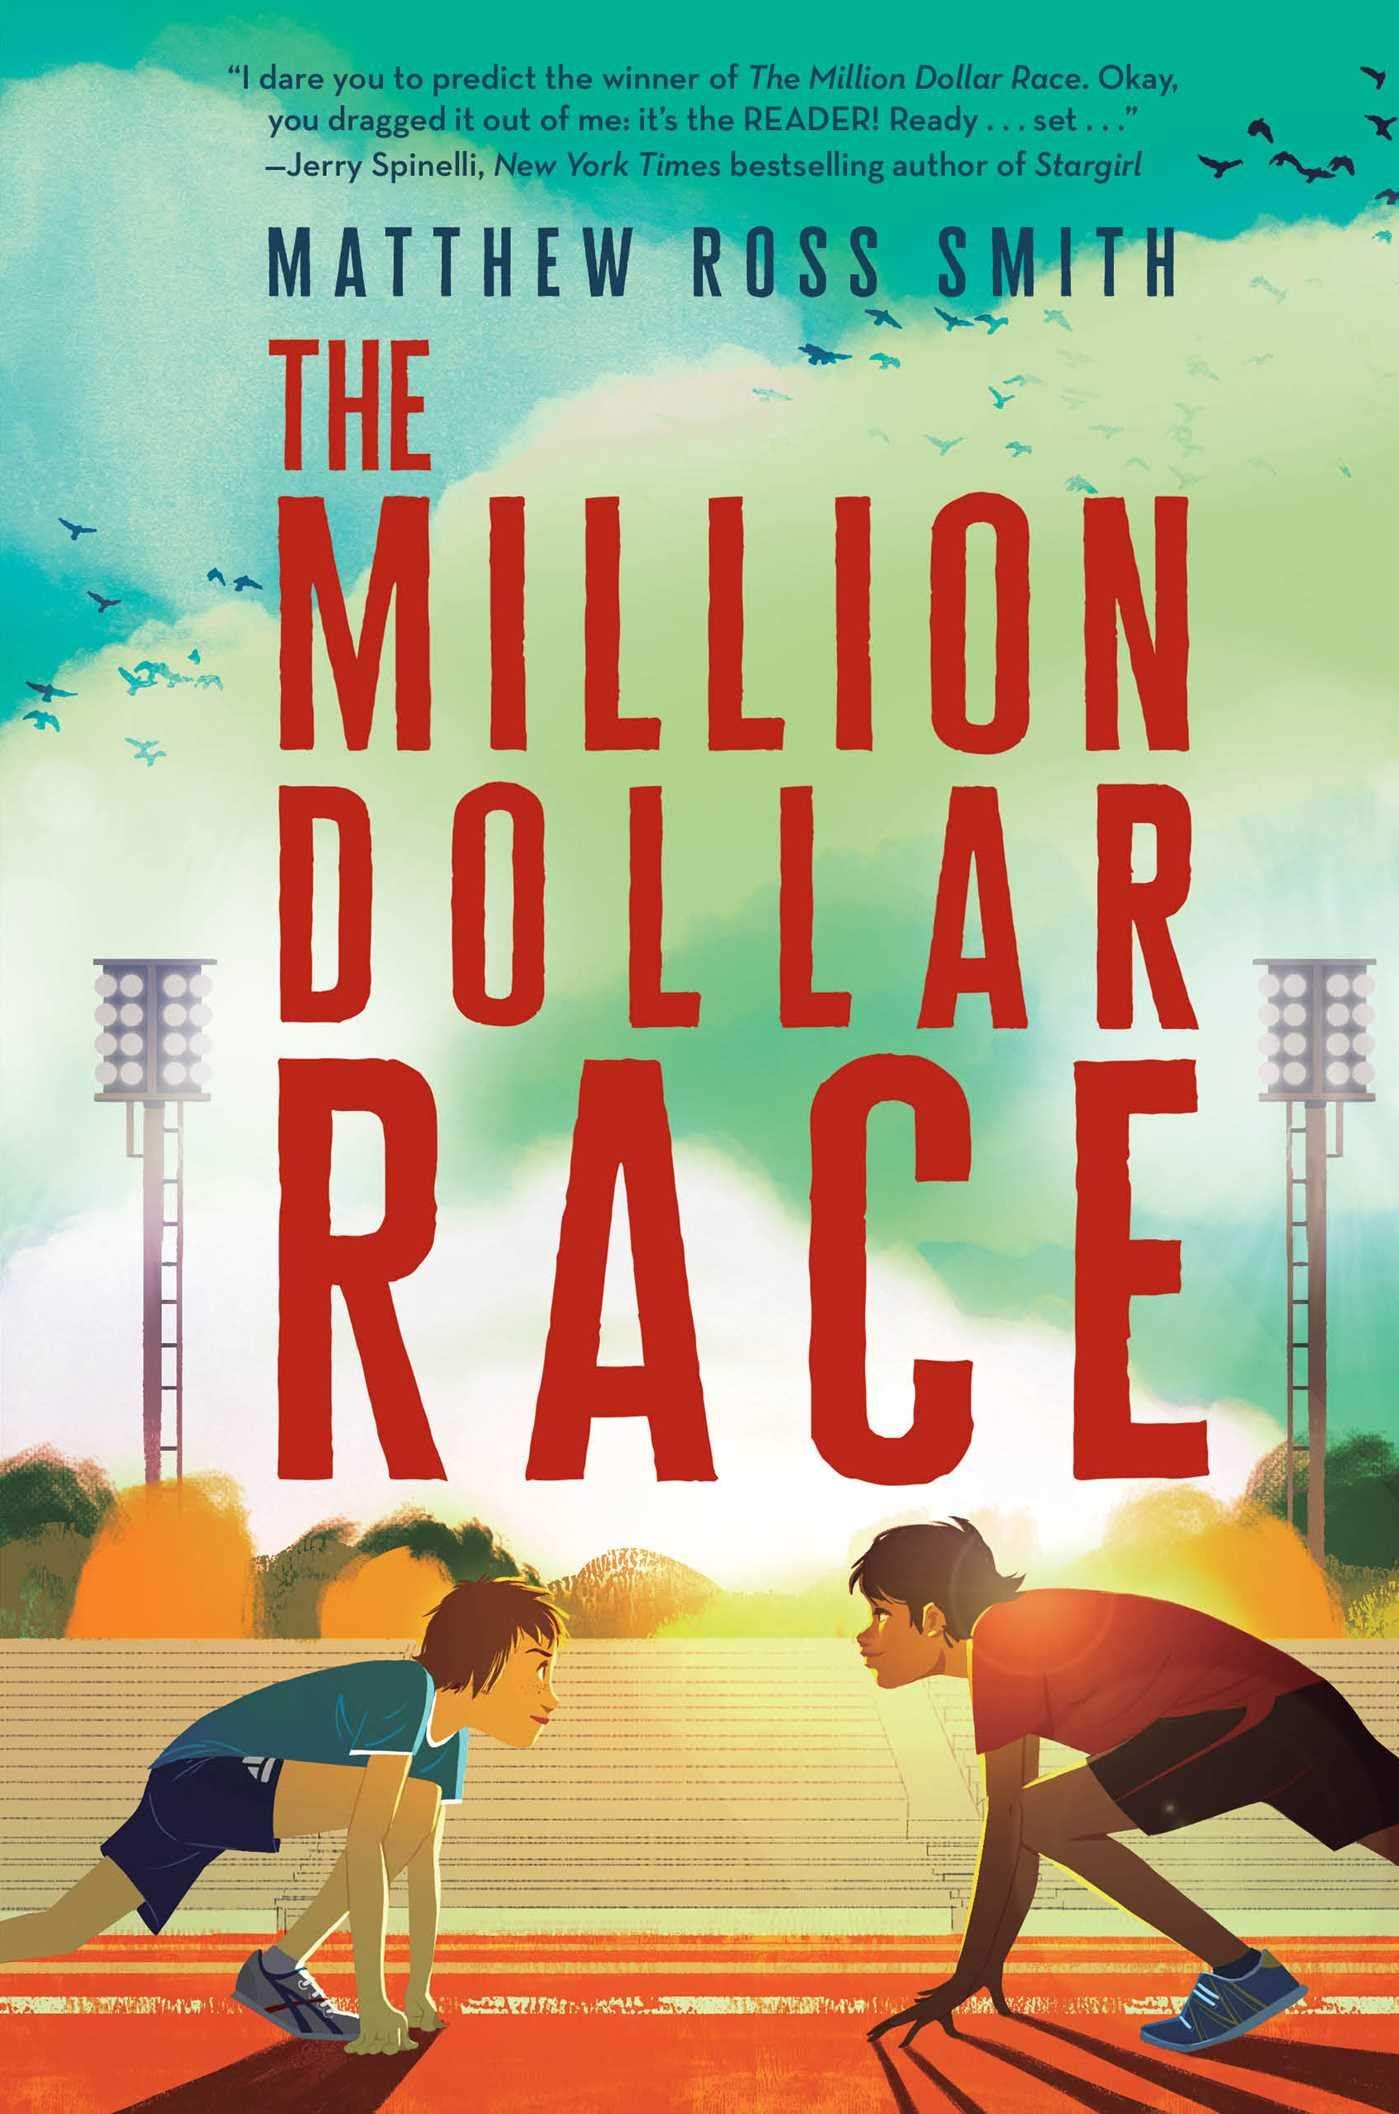 The Million Dollar Race